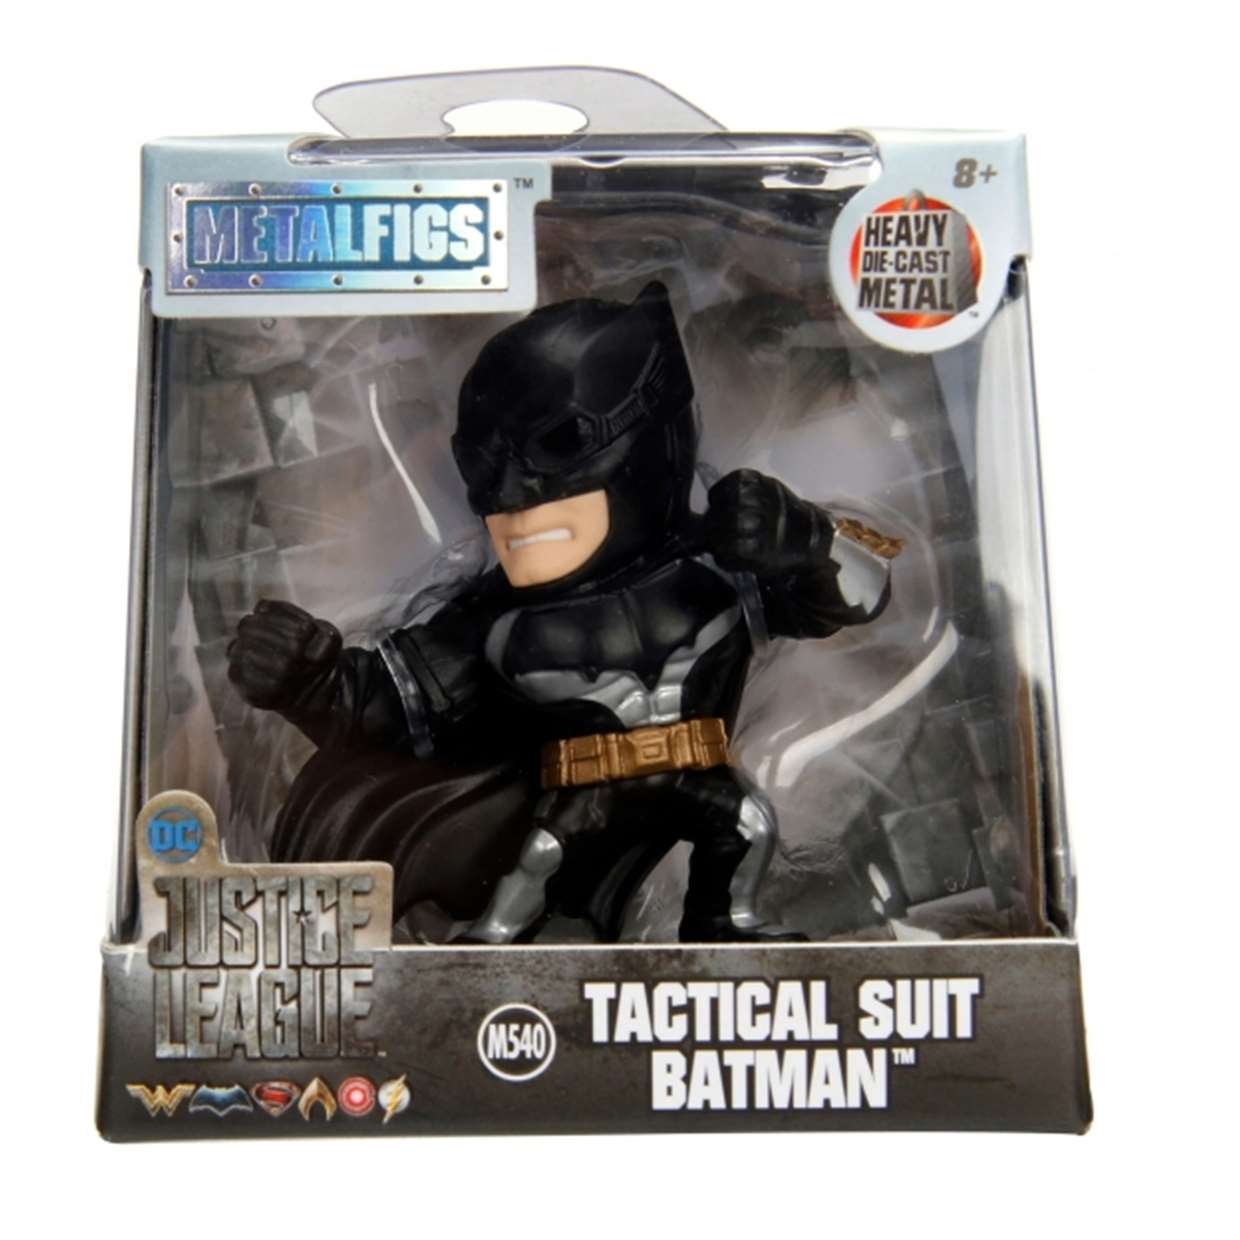 Batman M540 Tactical Suit Figura Justice League Metalfigs 